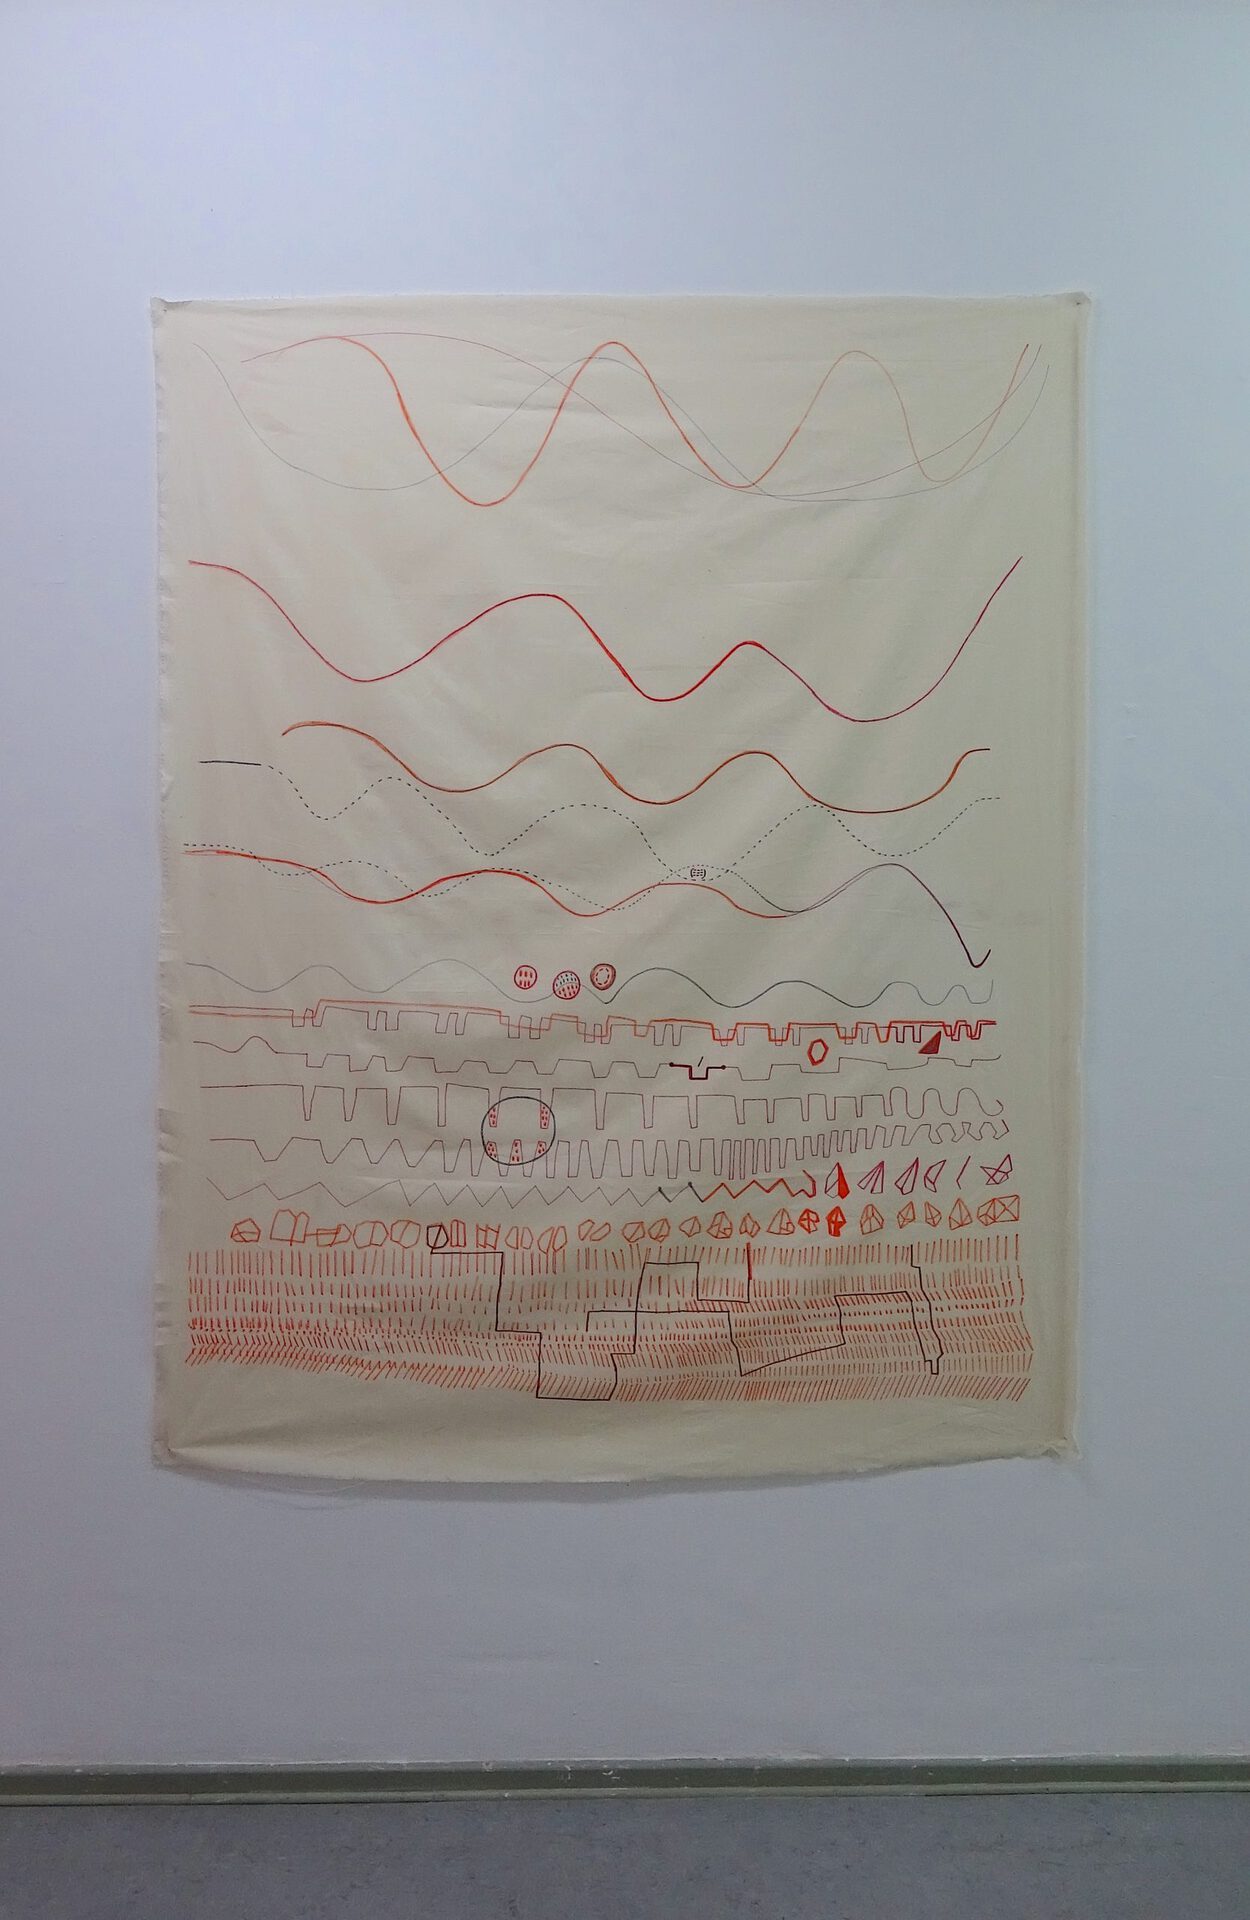 Monika Dorniak, Collective synchronisation, 2016, pen on fabric, 175 x 130 x 1 cm